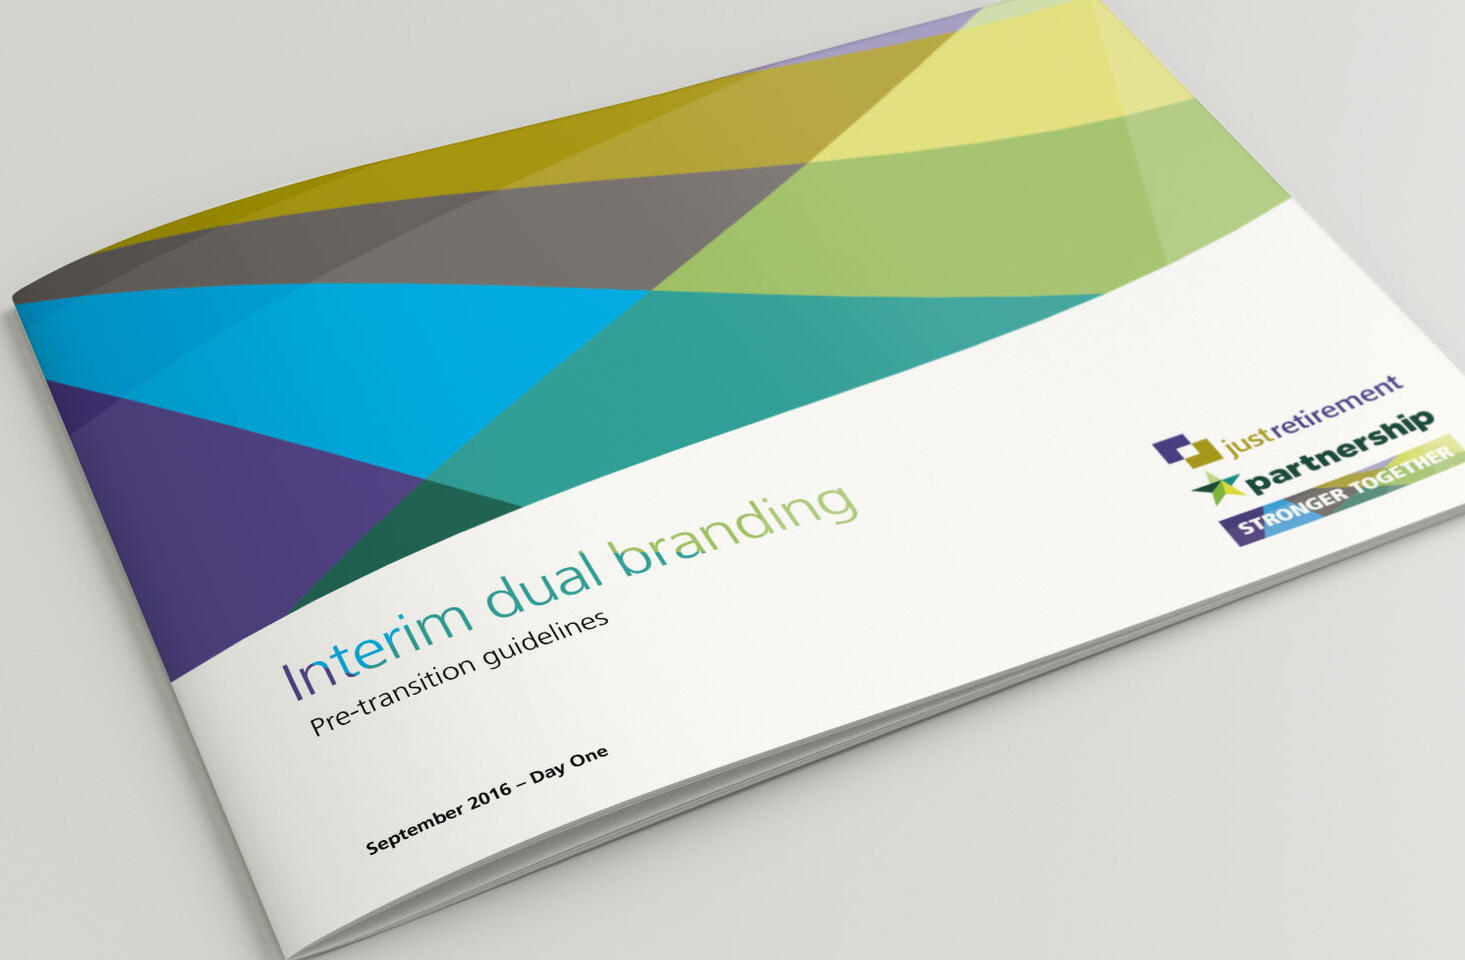 JRP Group interim dual branding guidelines